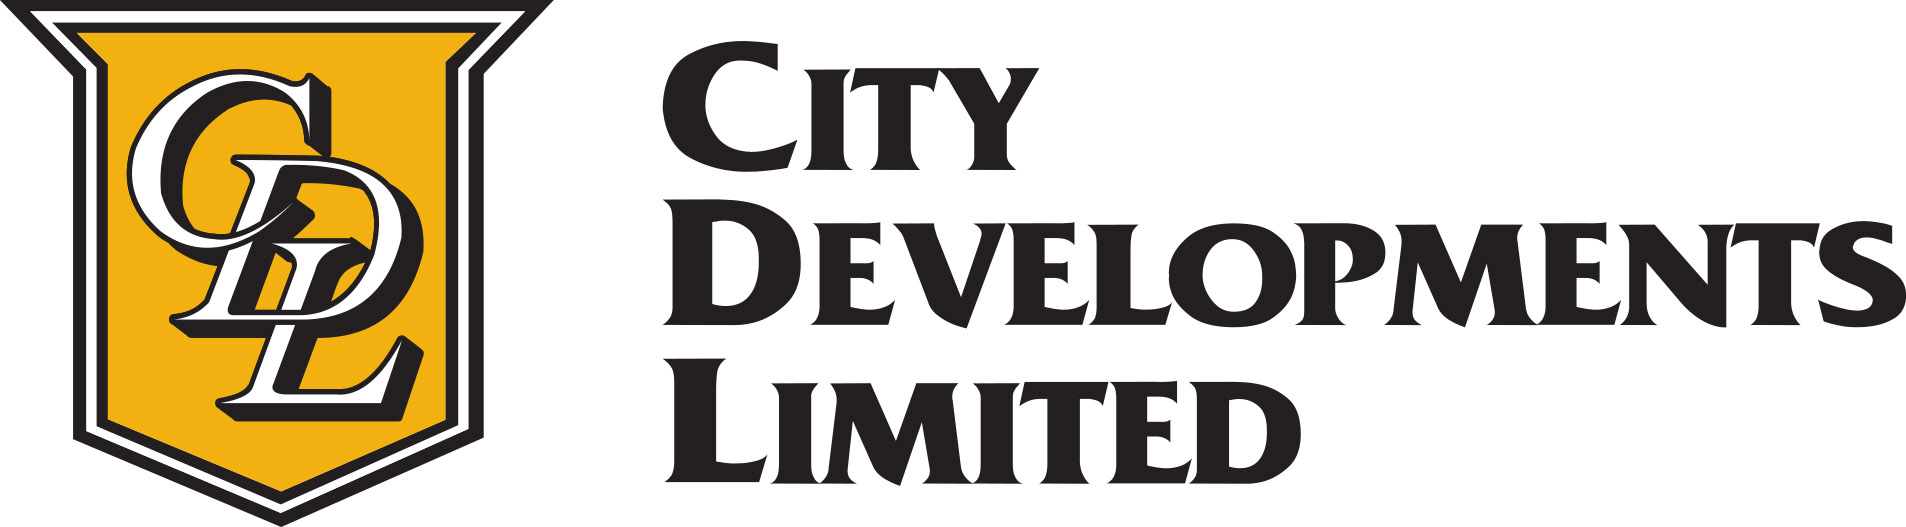 DBS: City Developments Ltd BUY TP S$10.50